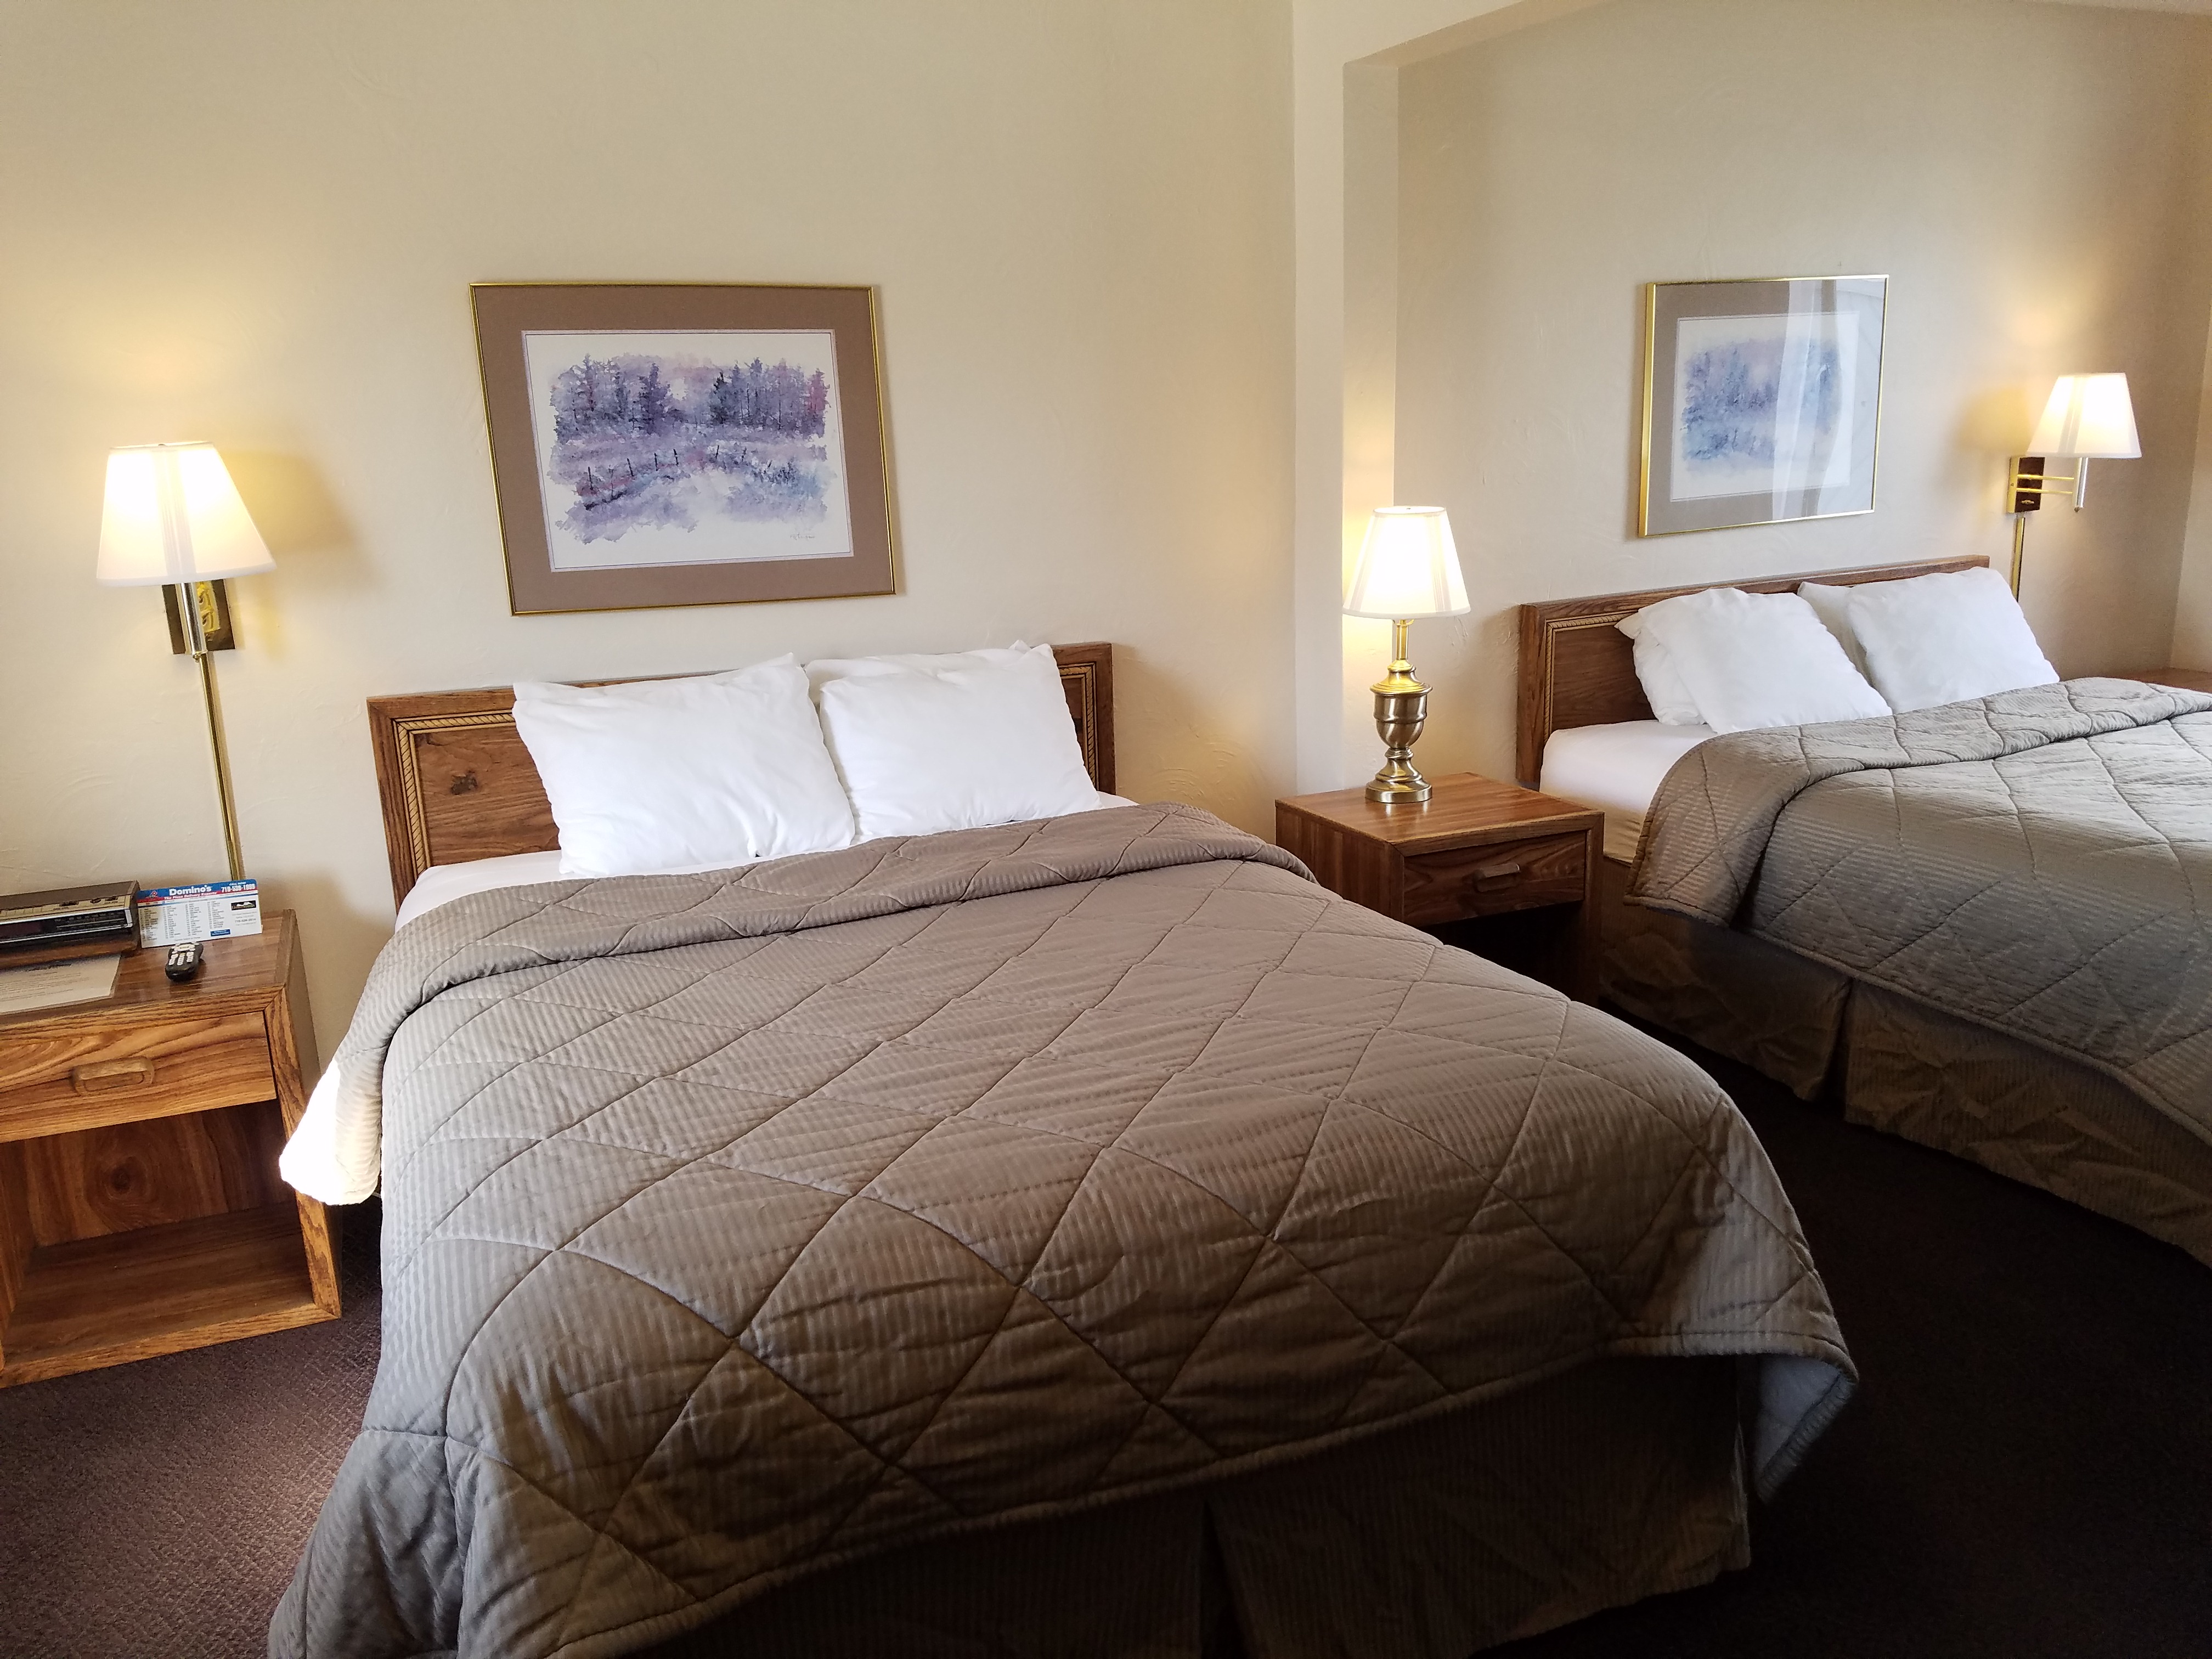 Indoor Heated Spa Sauna Great Amenities Hotels Motels Skiing Monarch Ski Resort Lodging Hotels Motels Great Western Colorado Lodge